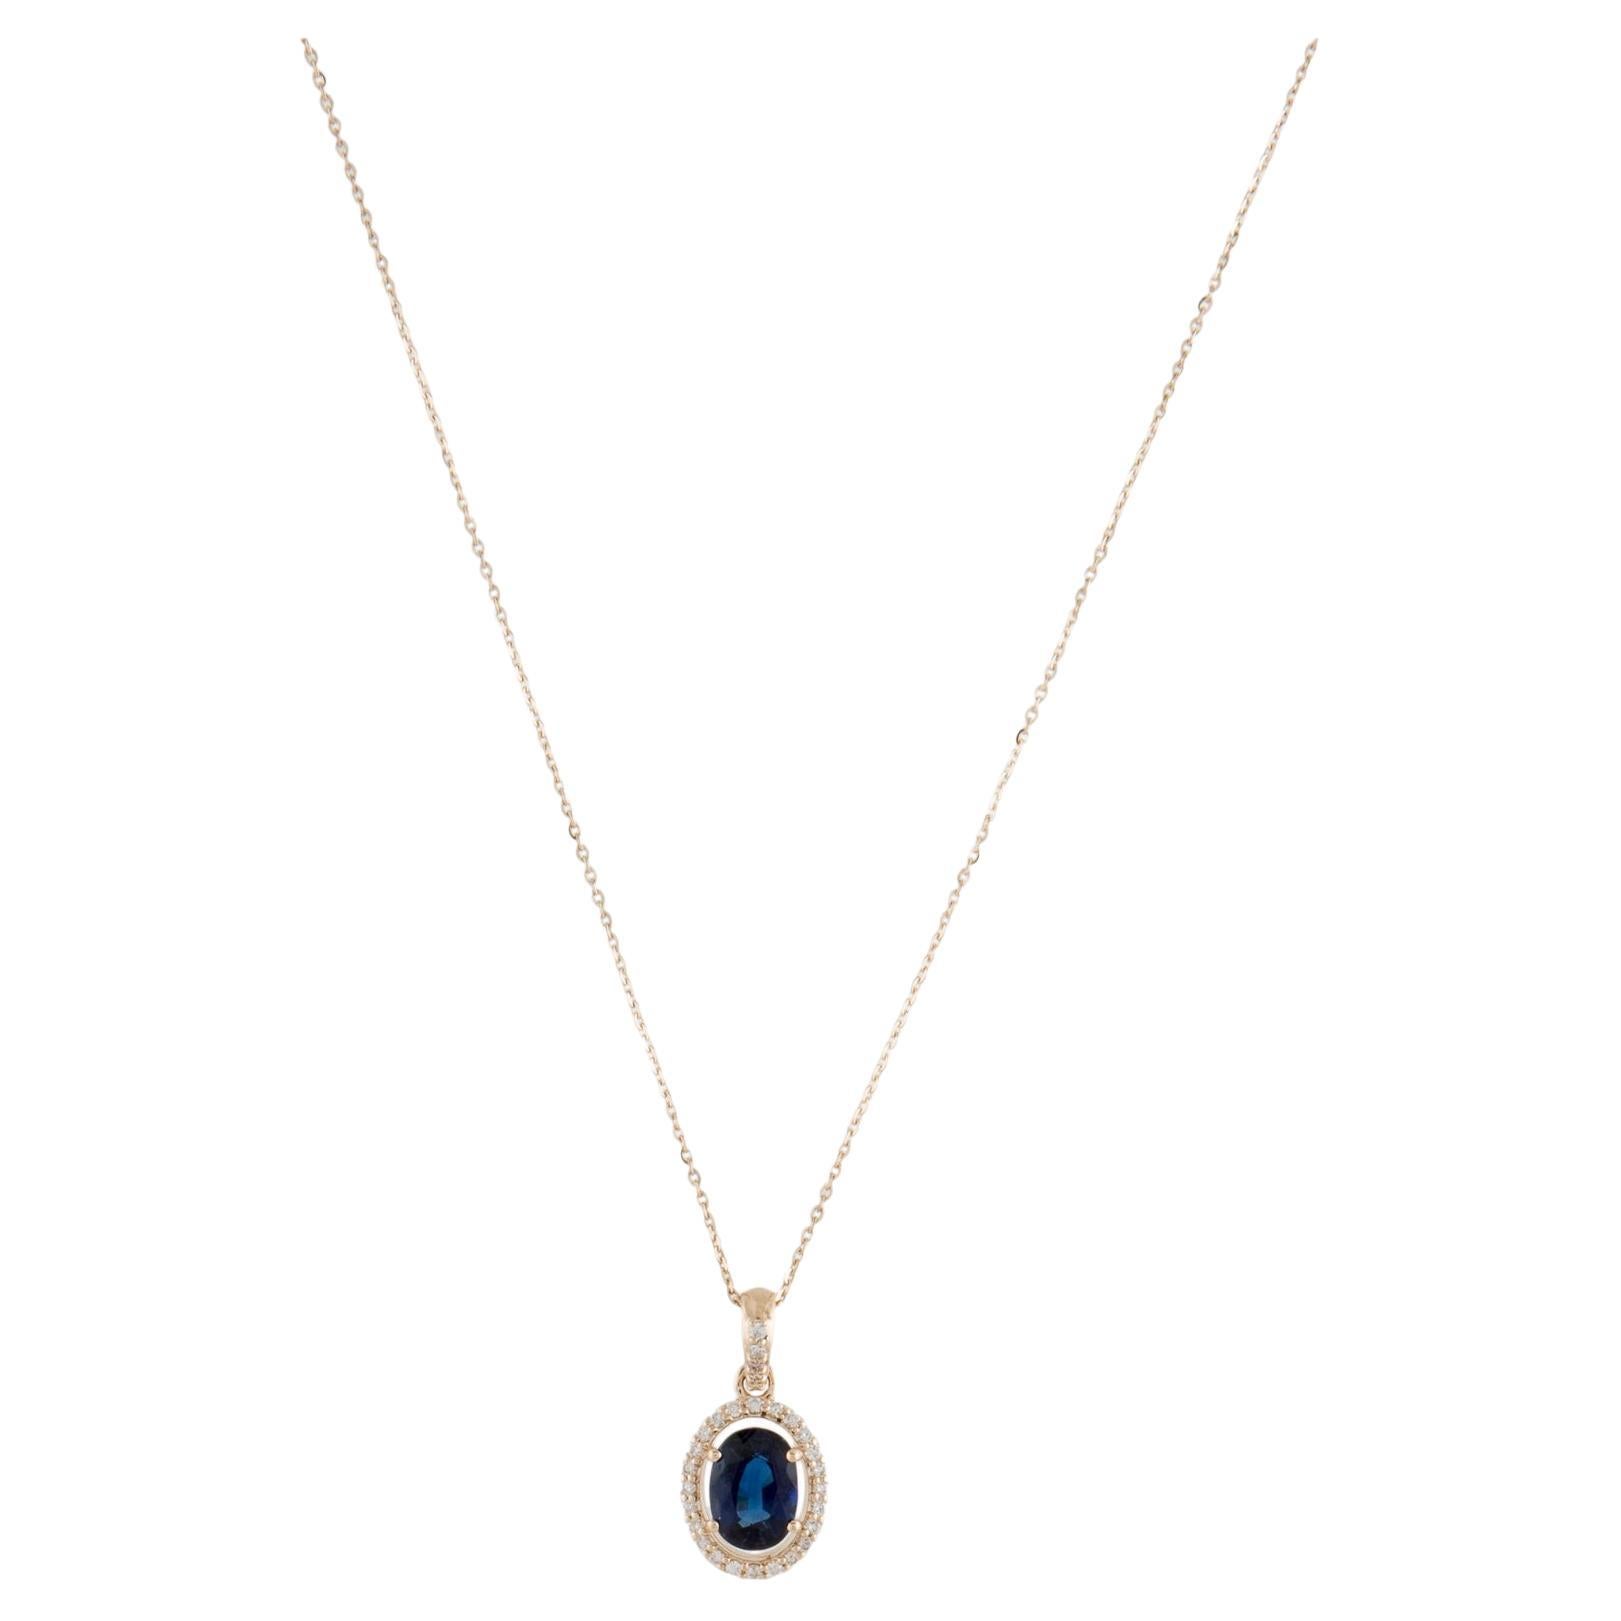 14K 1.26ct Sapphire & Diamond Pendant Necklace: Exquisite Luxury Statement Piece For Sale